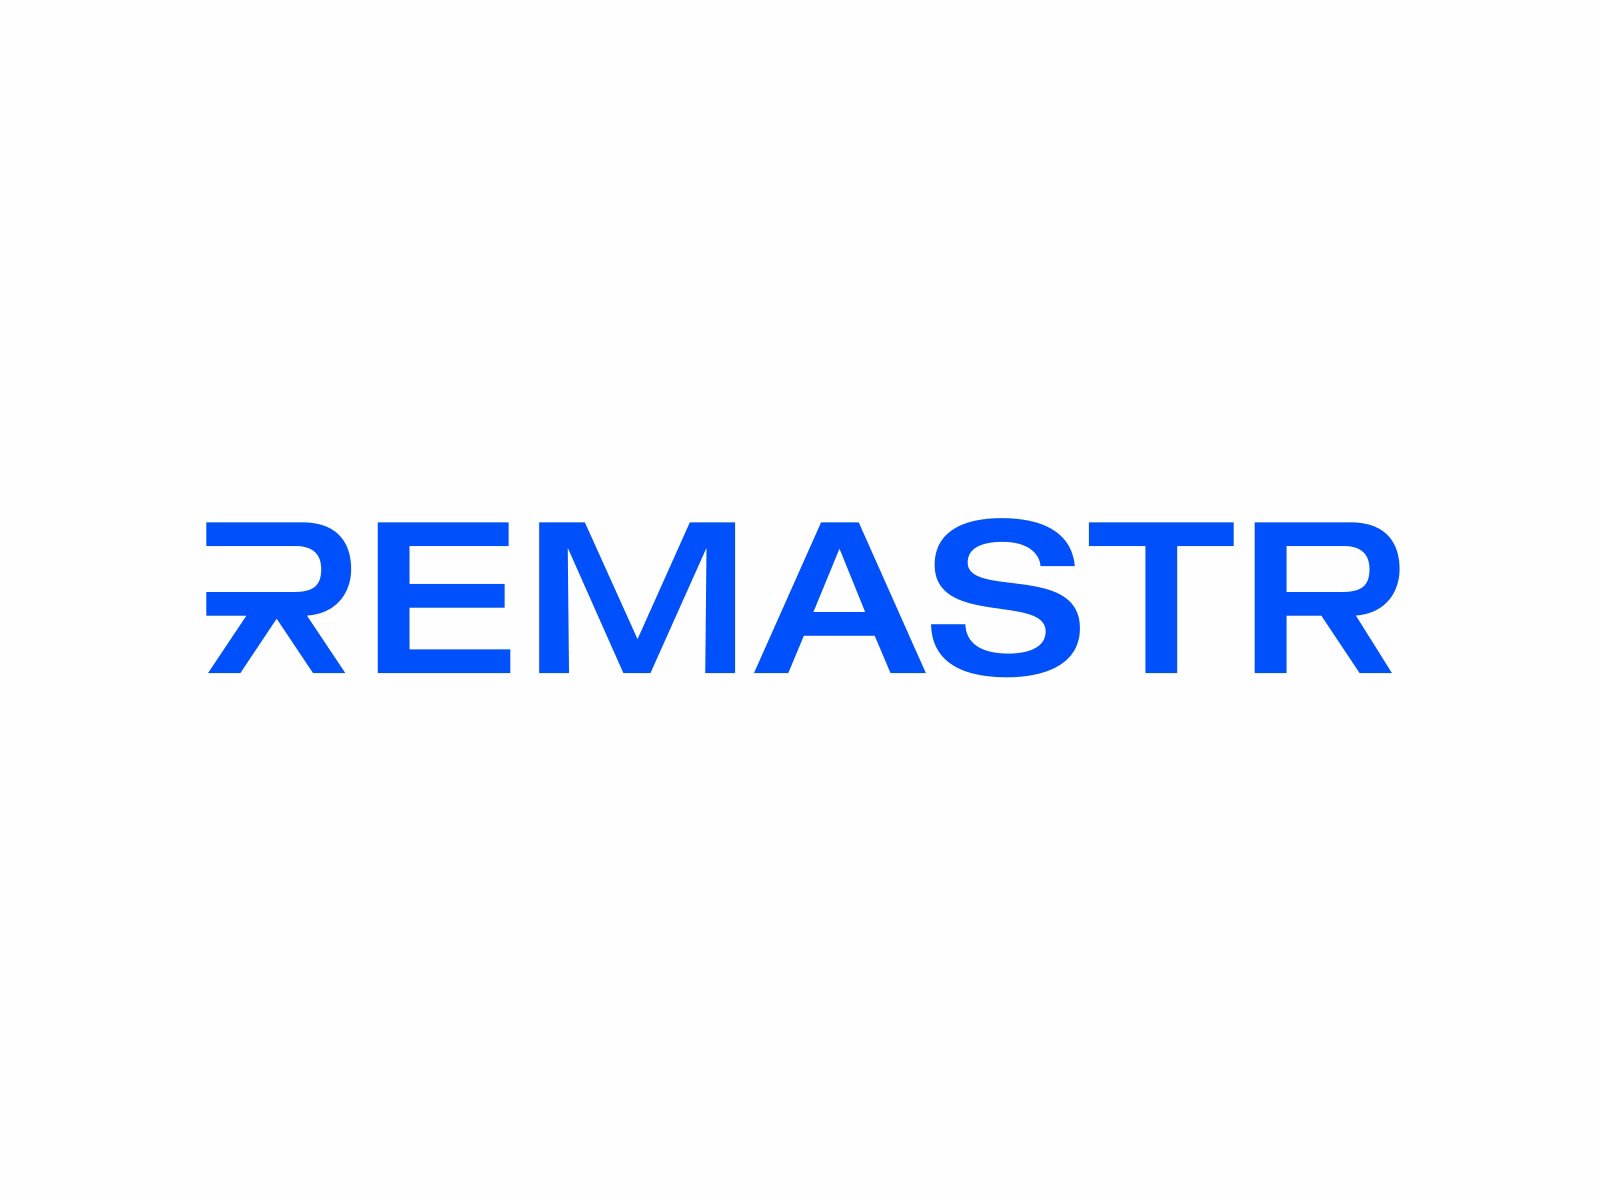 Remastr logo animation intro opener